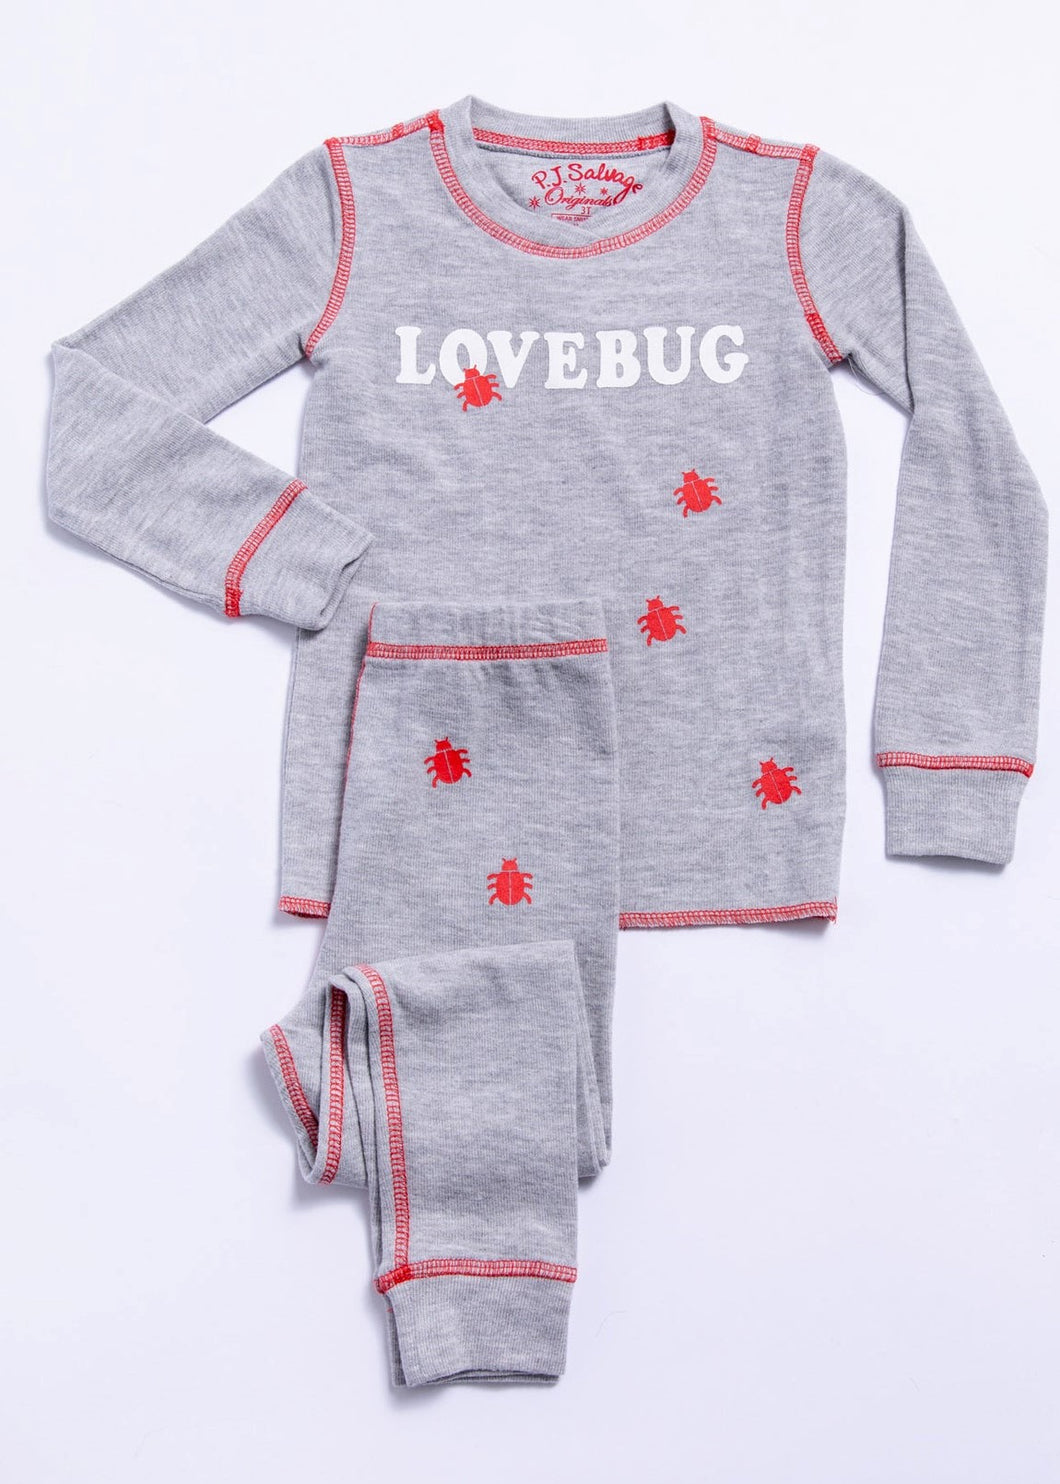 toddlers love bug pj set